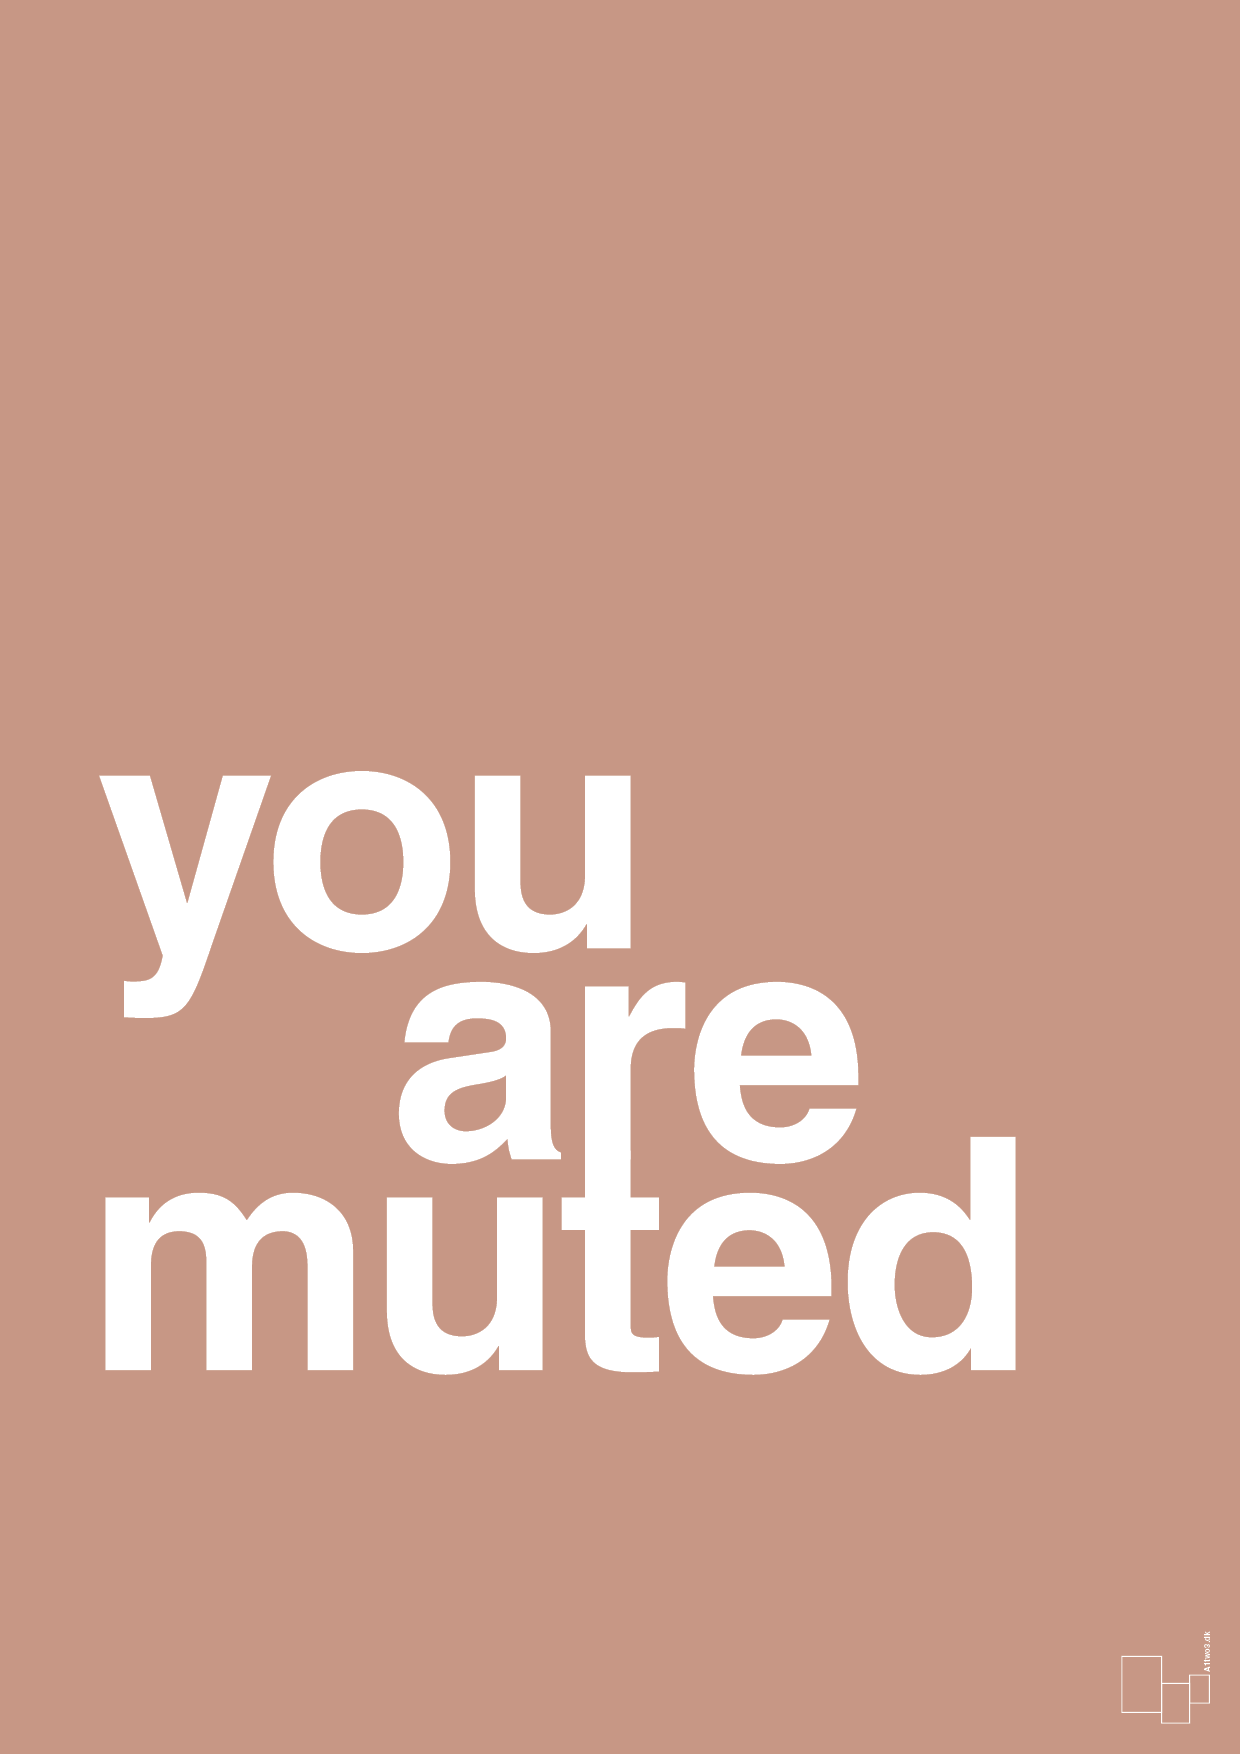 you are muted - Plakat med Ordsprog i Powder